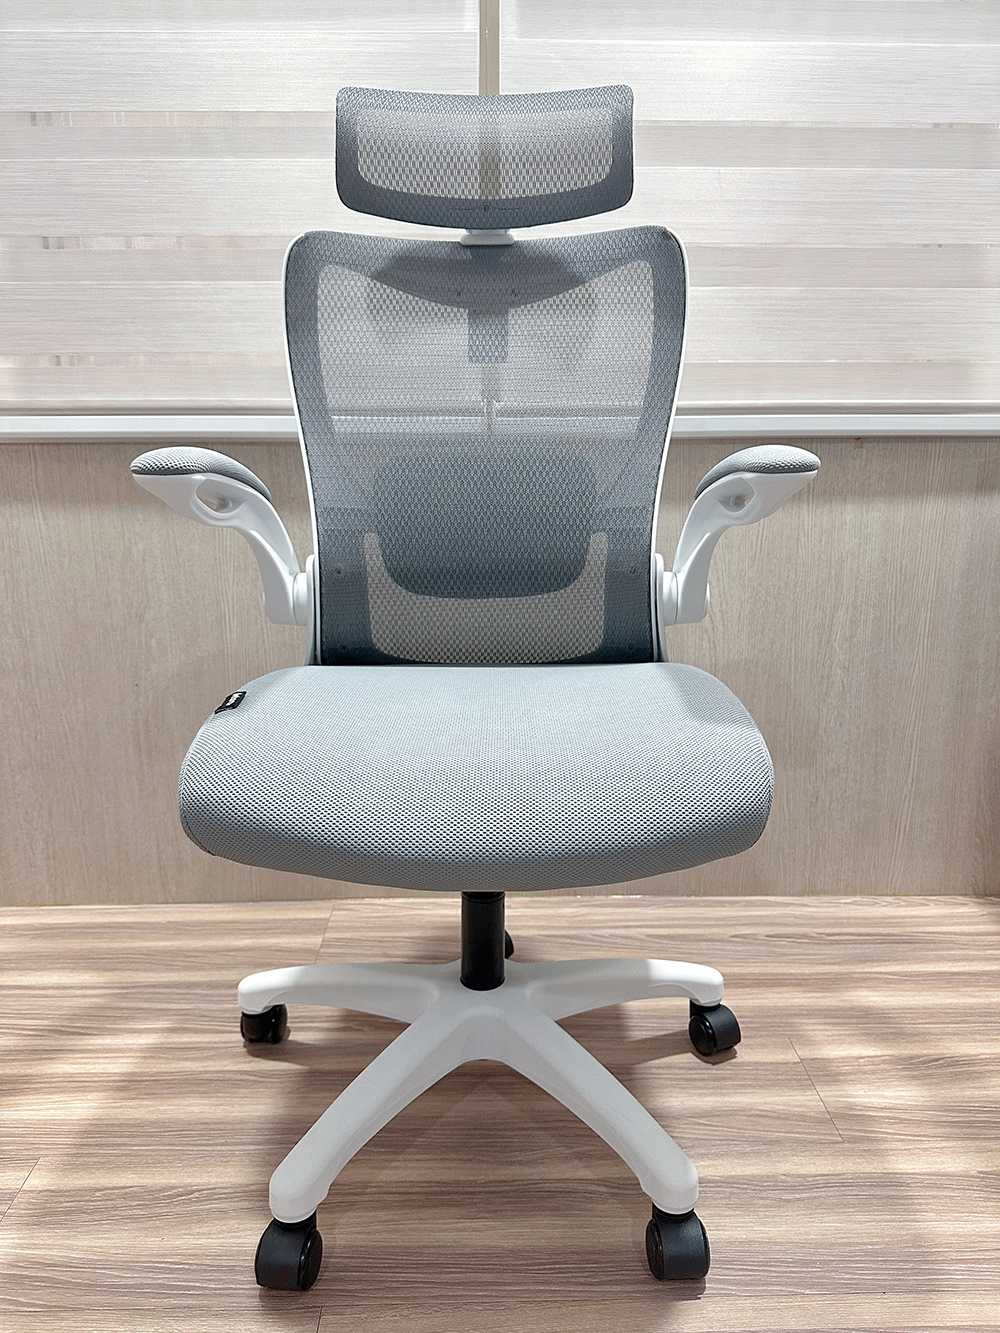 Artso亞梭雲柔椅│專為女性打造的人體工學椅。透氣/支撐/大面積，實現雲柔般的坐感體驗，工作也能感受像坐在沙發上一樣舒服放鬆~